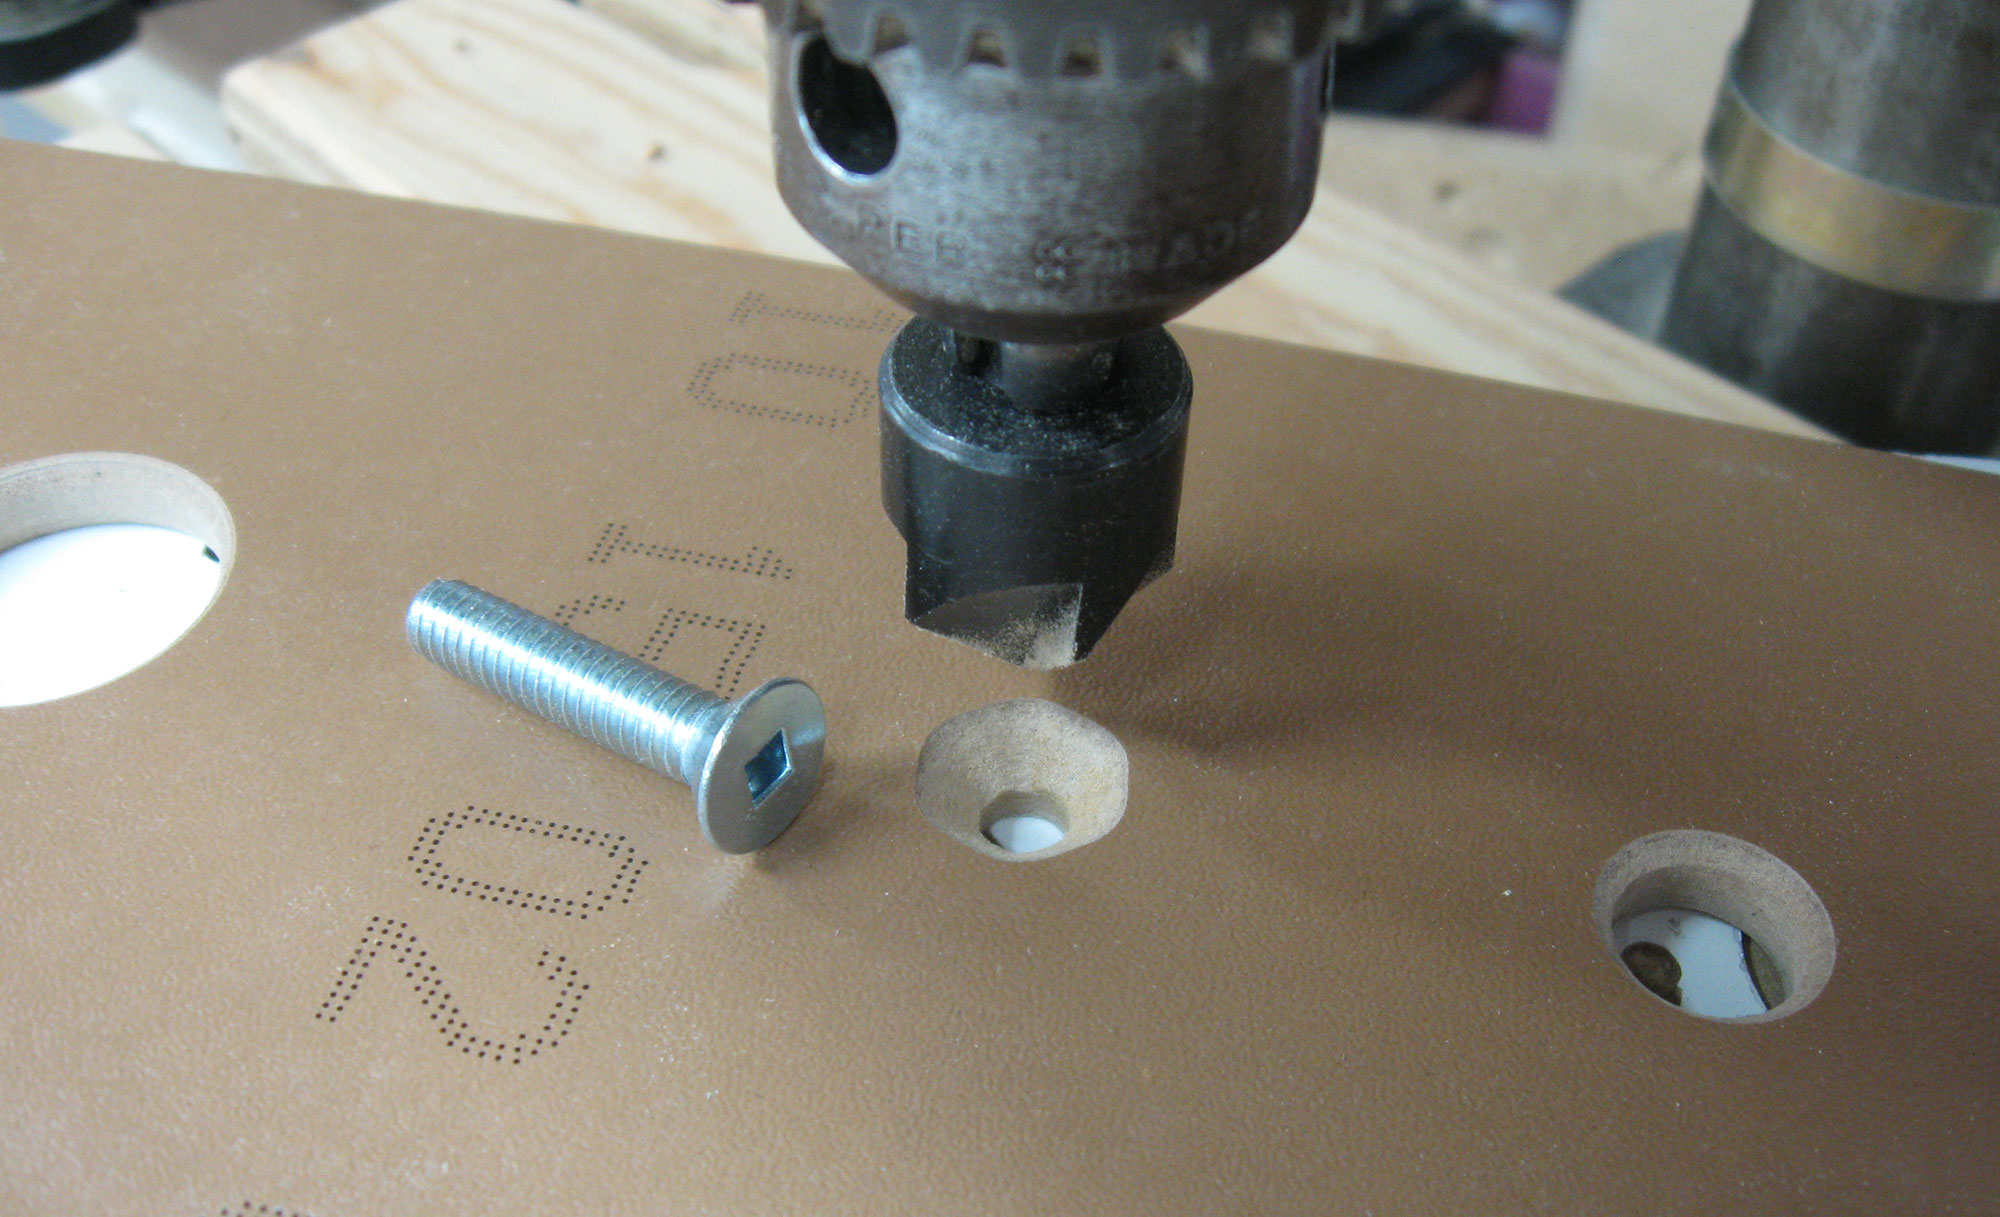 Drilled hole and 1/4" flat-head machine bolt.